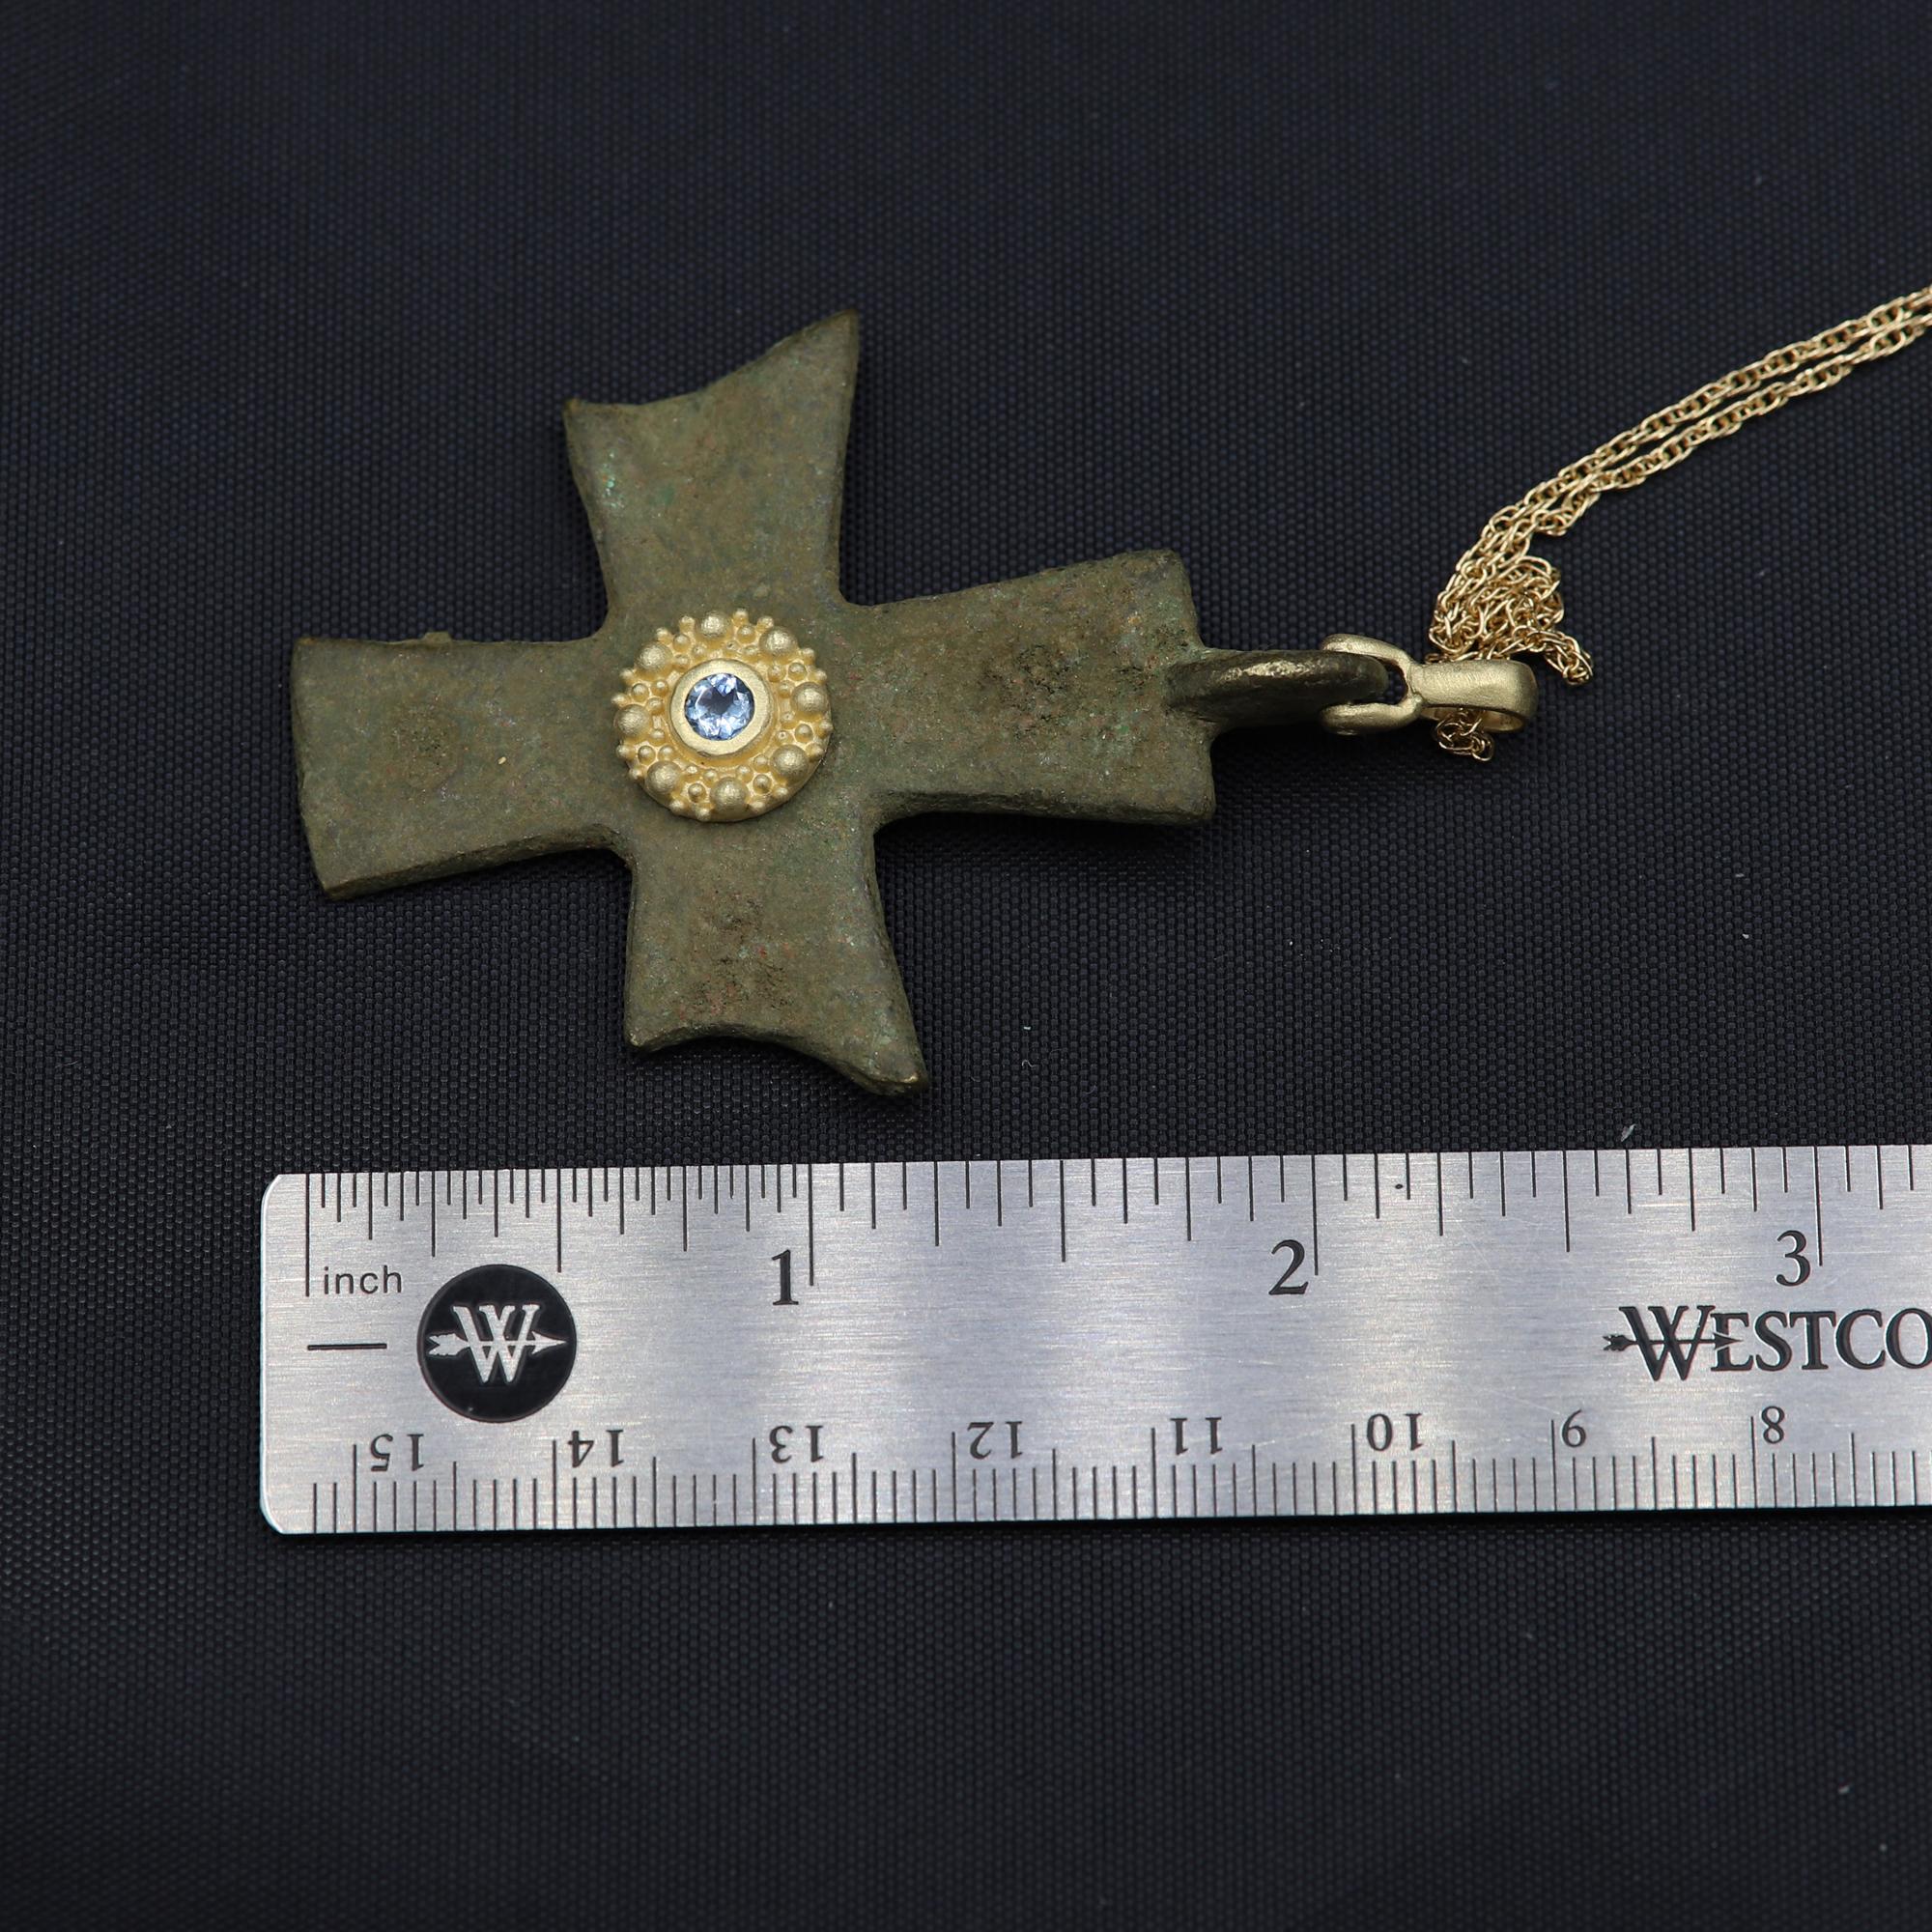 byzantine style cross